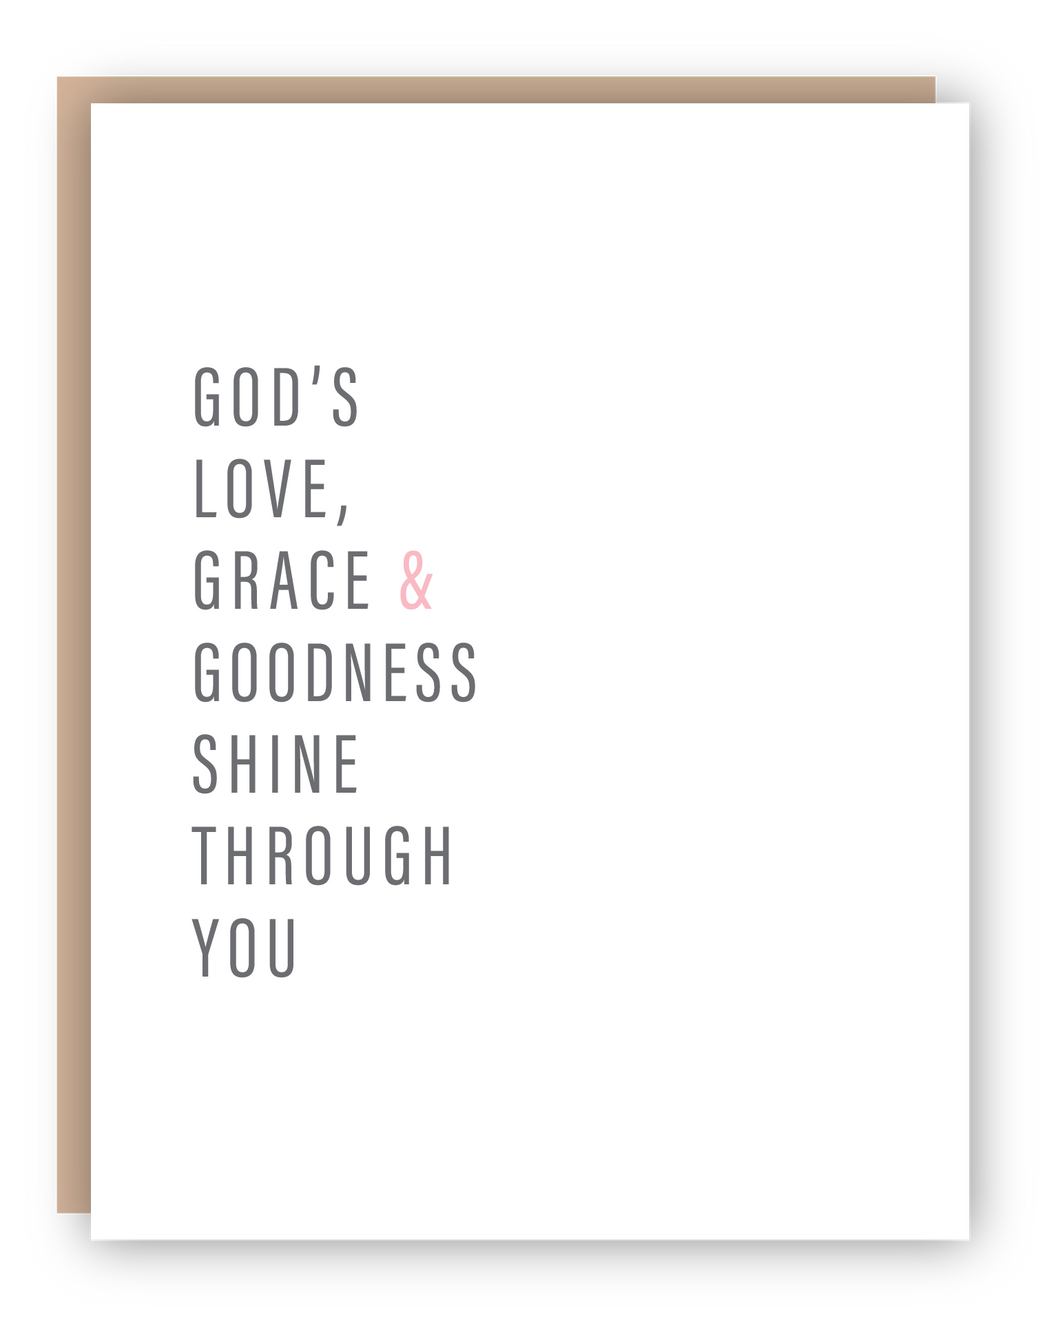 GOD'S LOVE